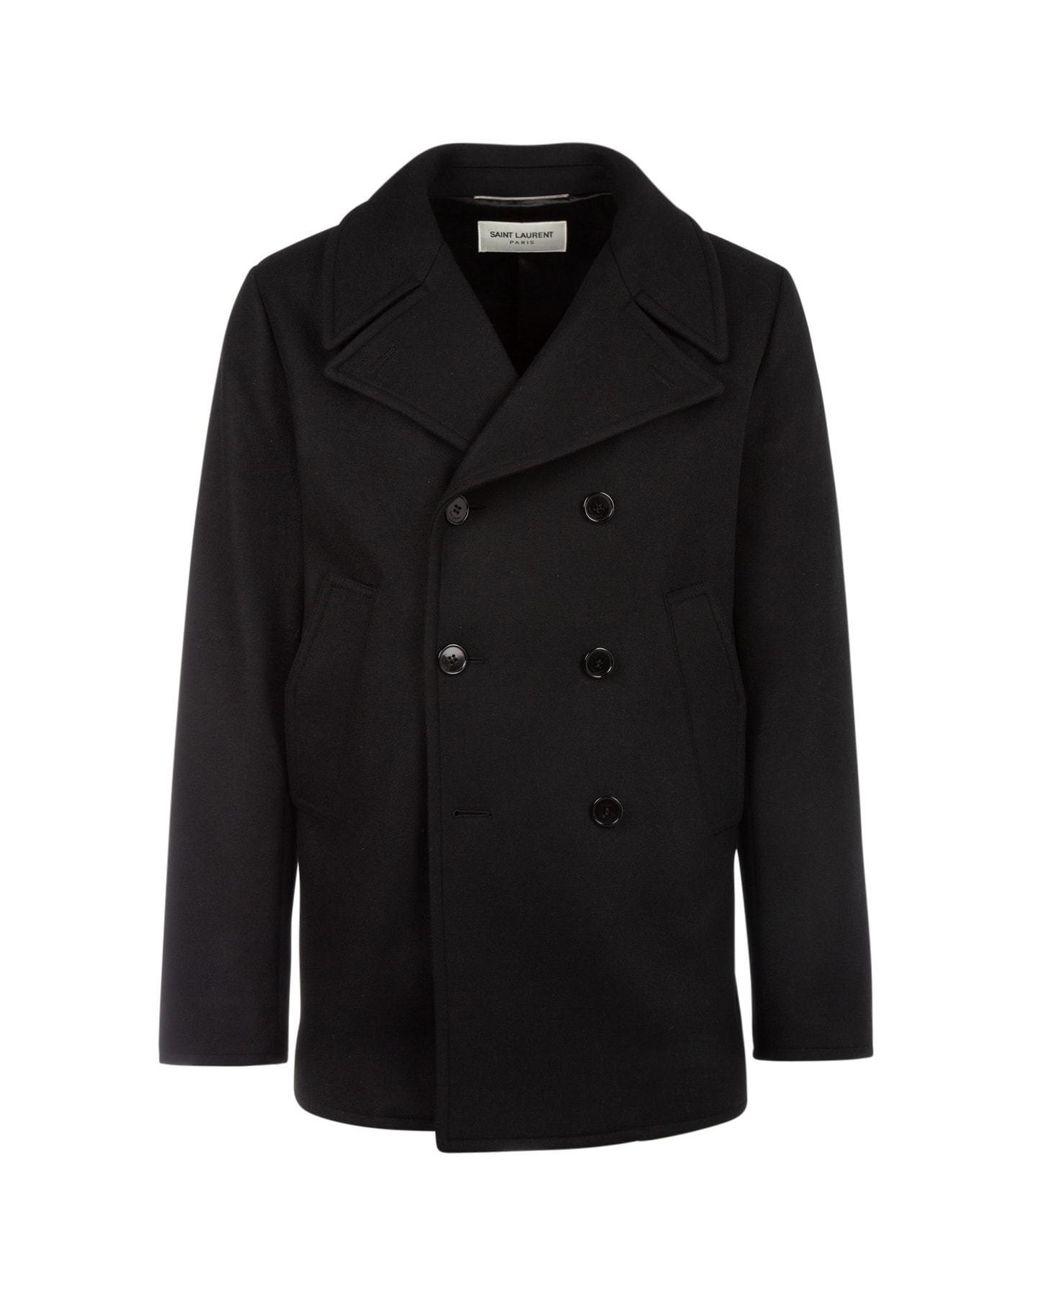 Saint Laurent Wool Double-breasted Pea Coat in Black for Men - Lyst